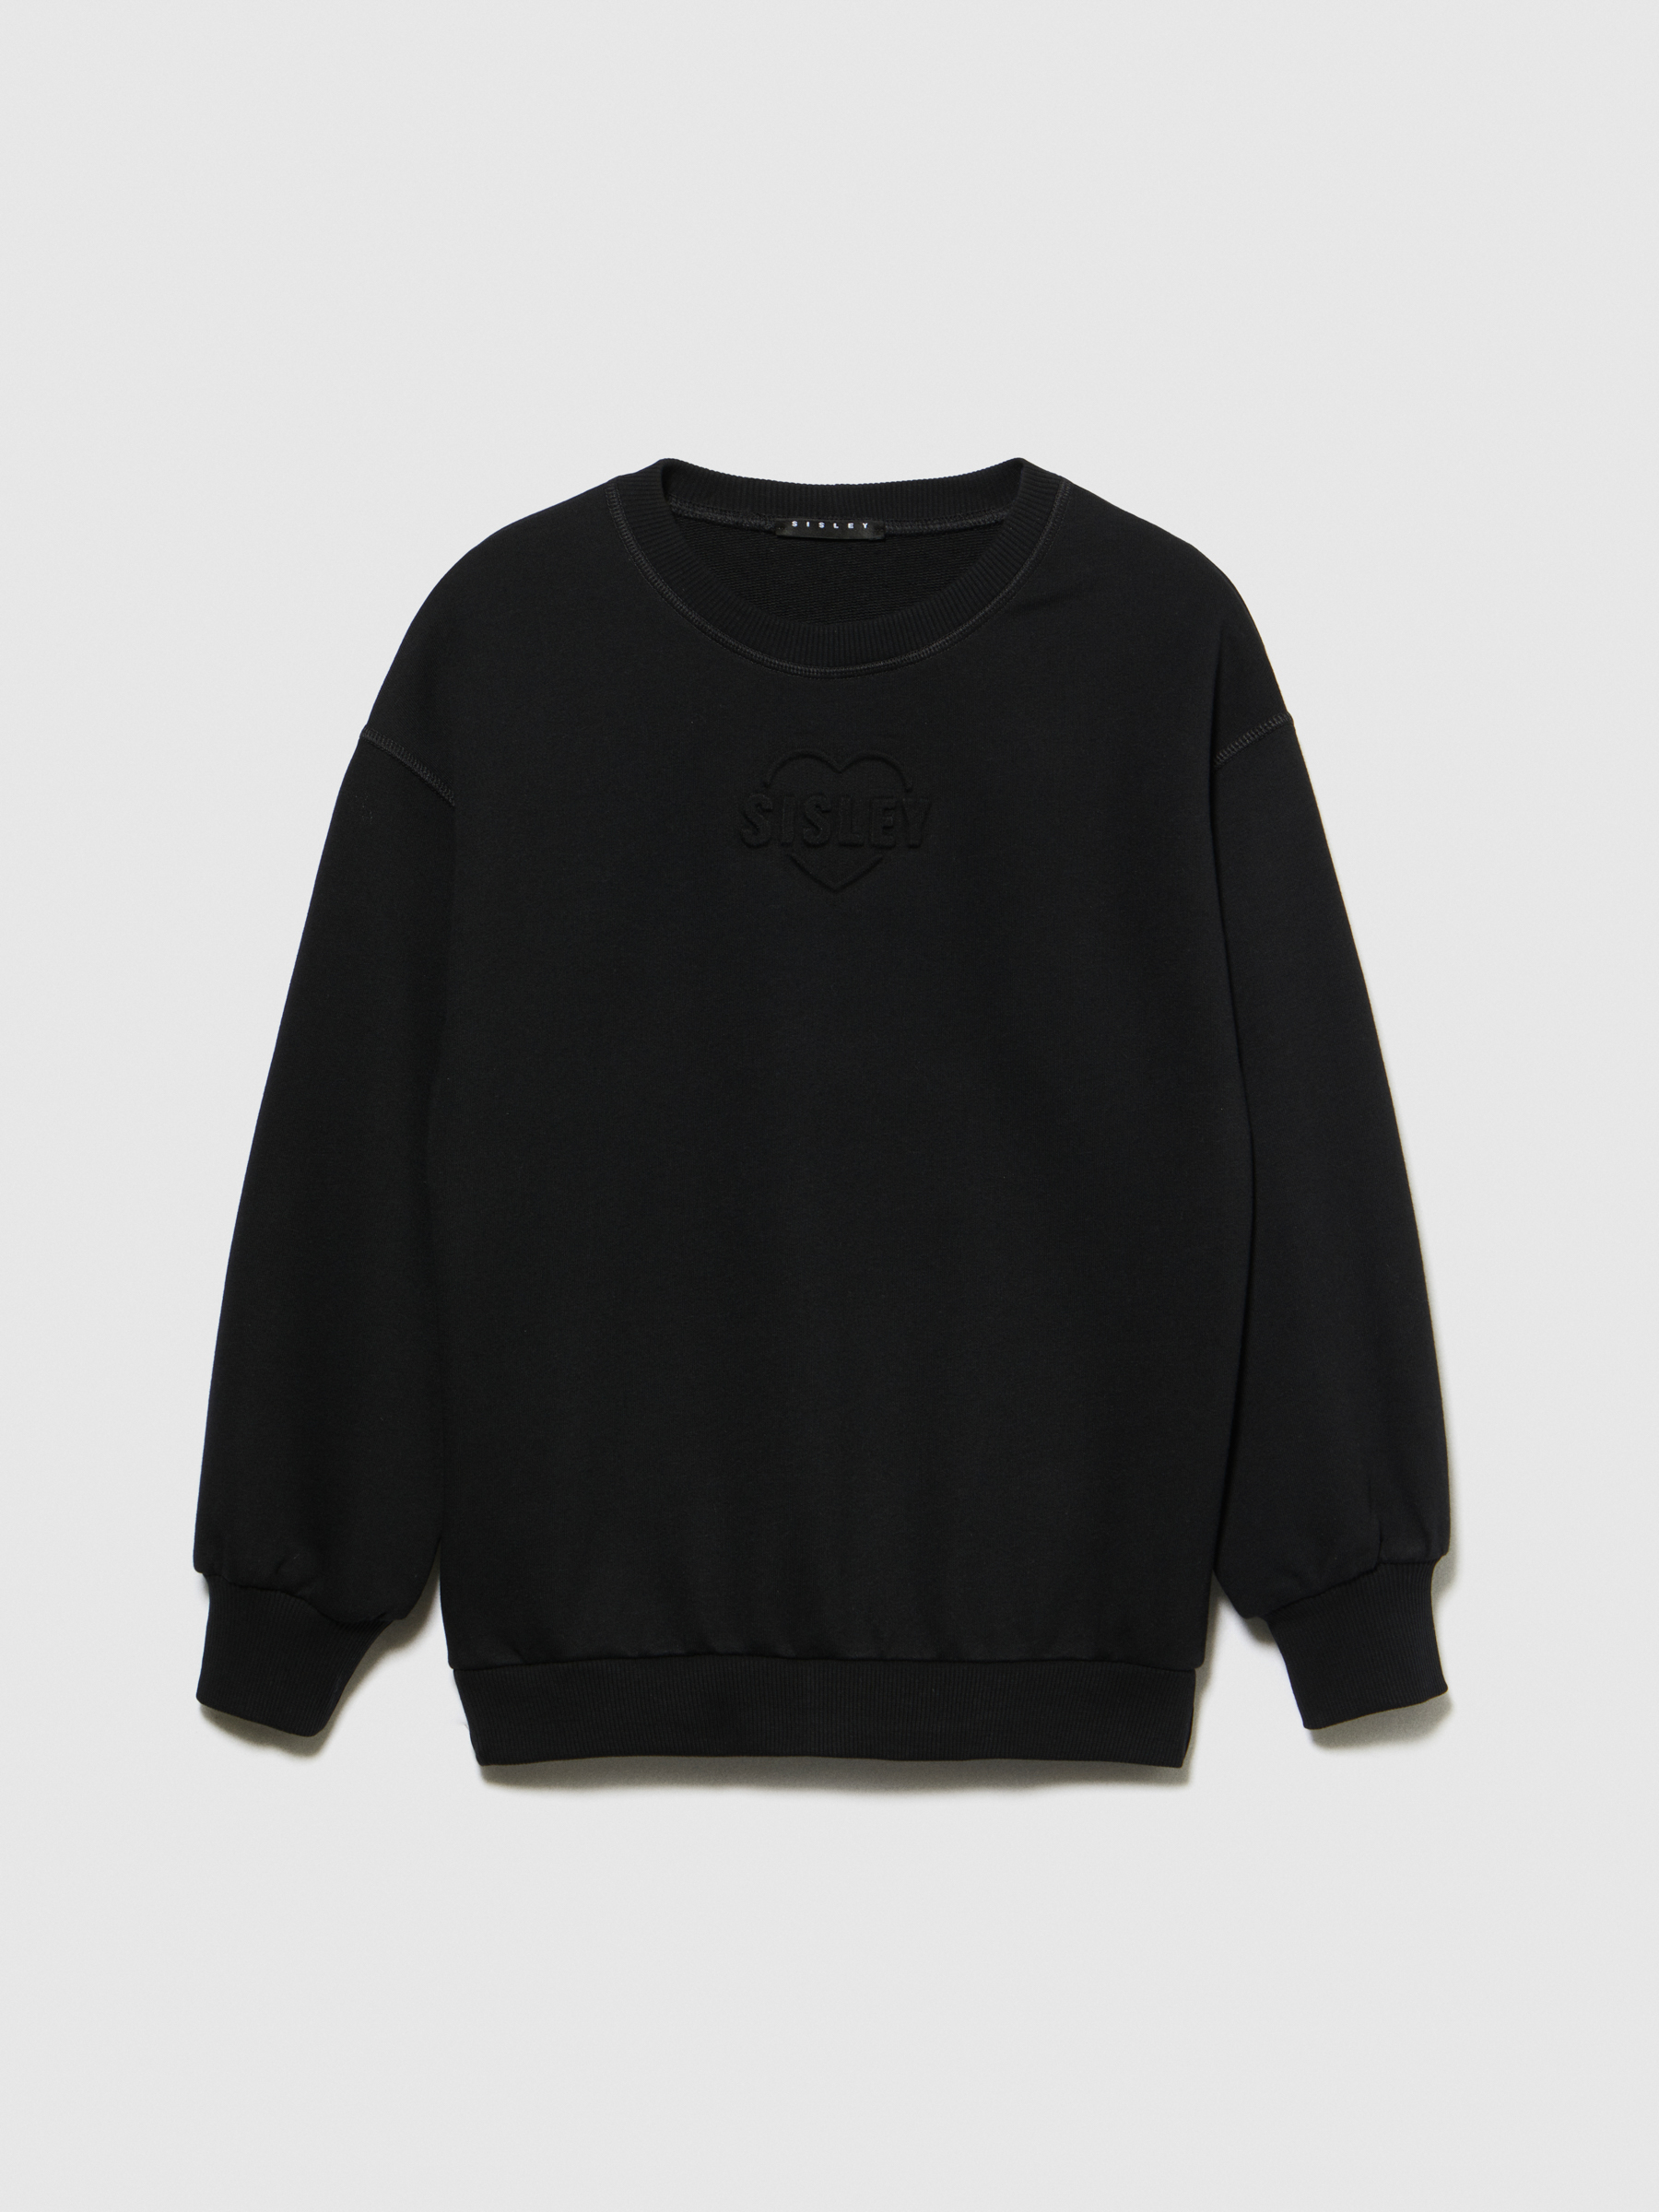 Sisley Young - Sweatshirt With Embossed Print, Woman, Black, Size: M